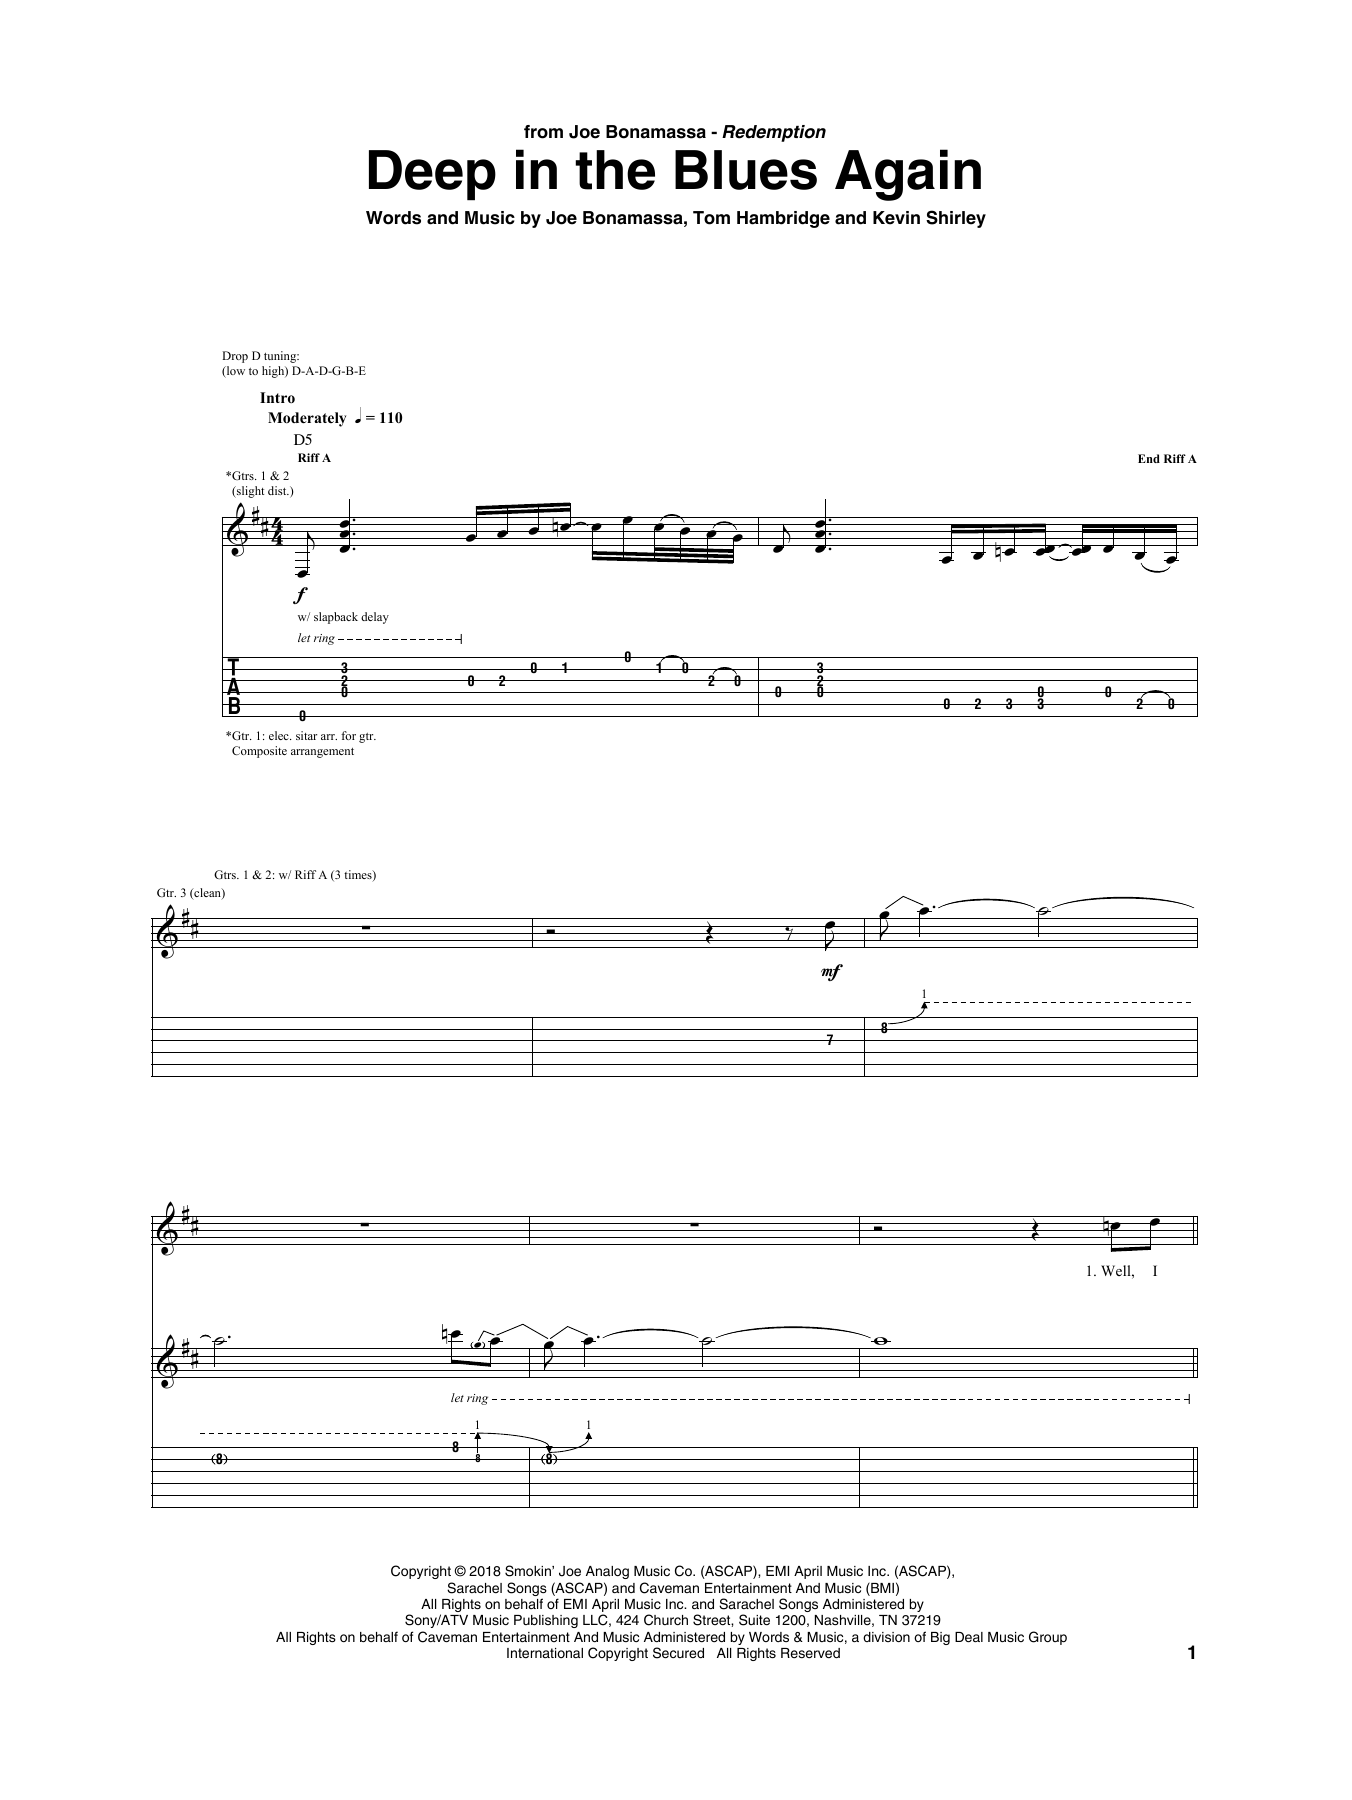 Joe Bonamassa Deep In The Blues Again Sheet Music Notes & Chords for Guitar Tab - Download or Print PDF